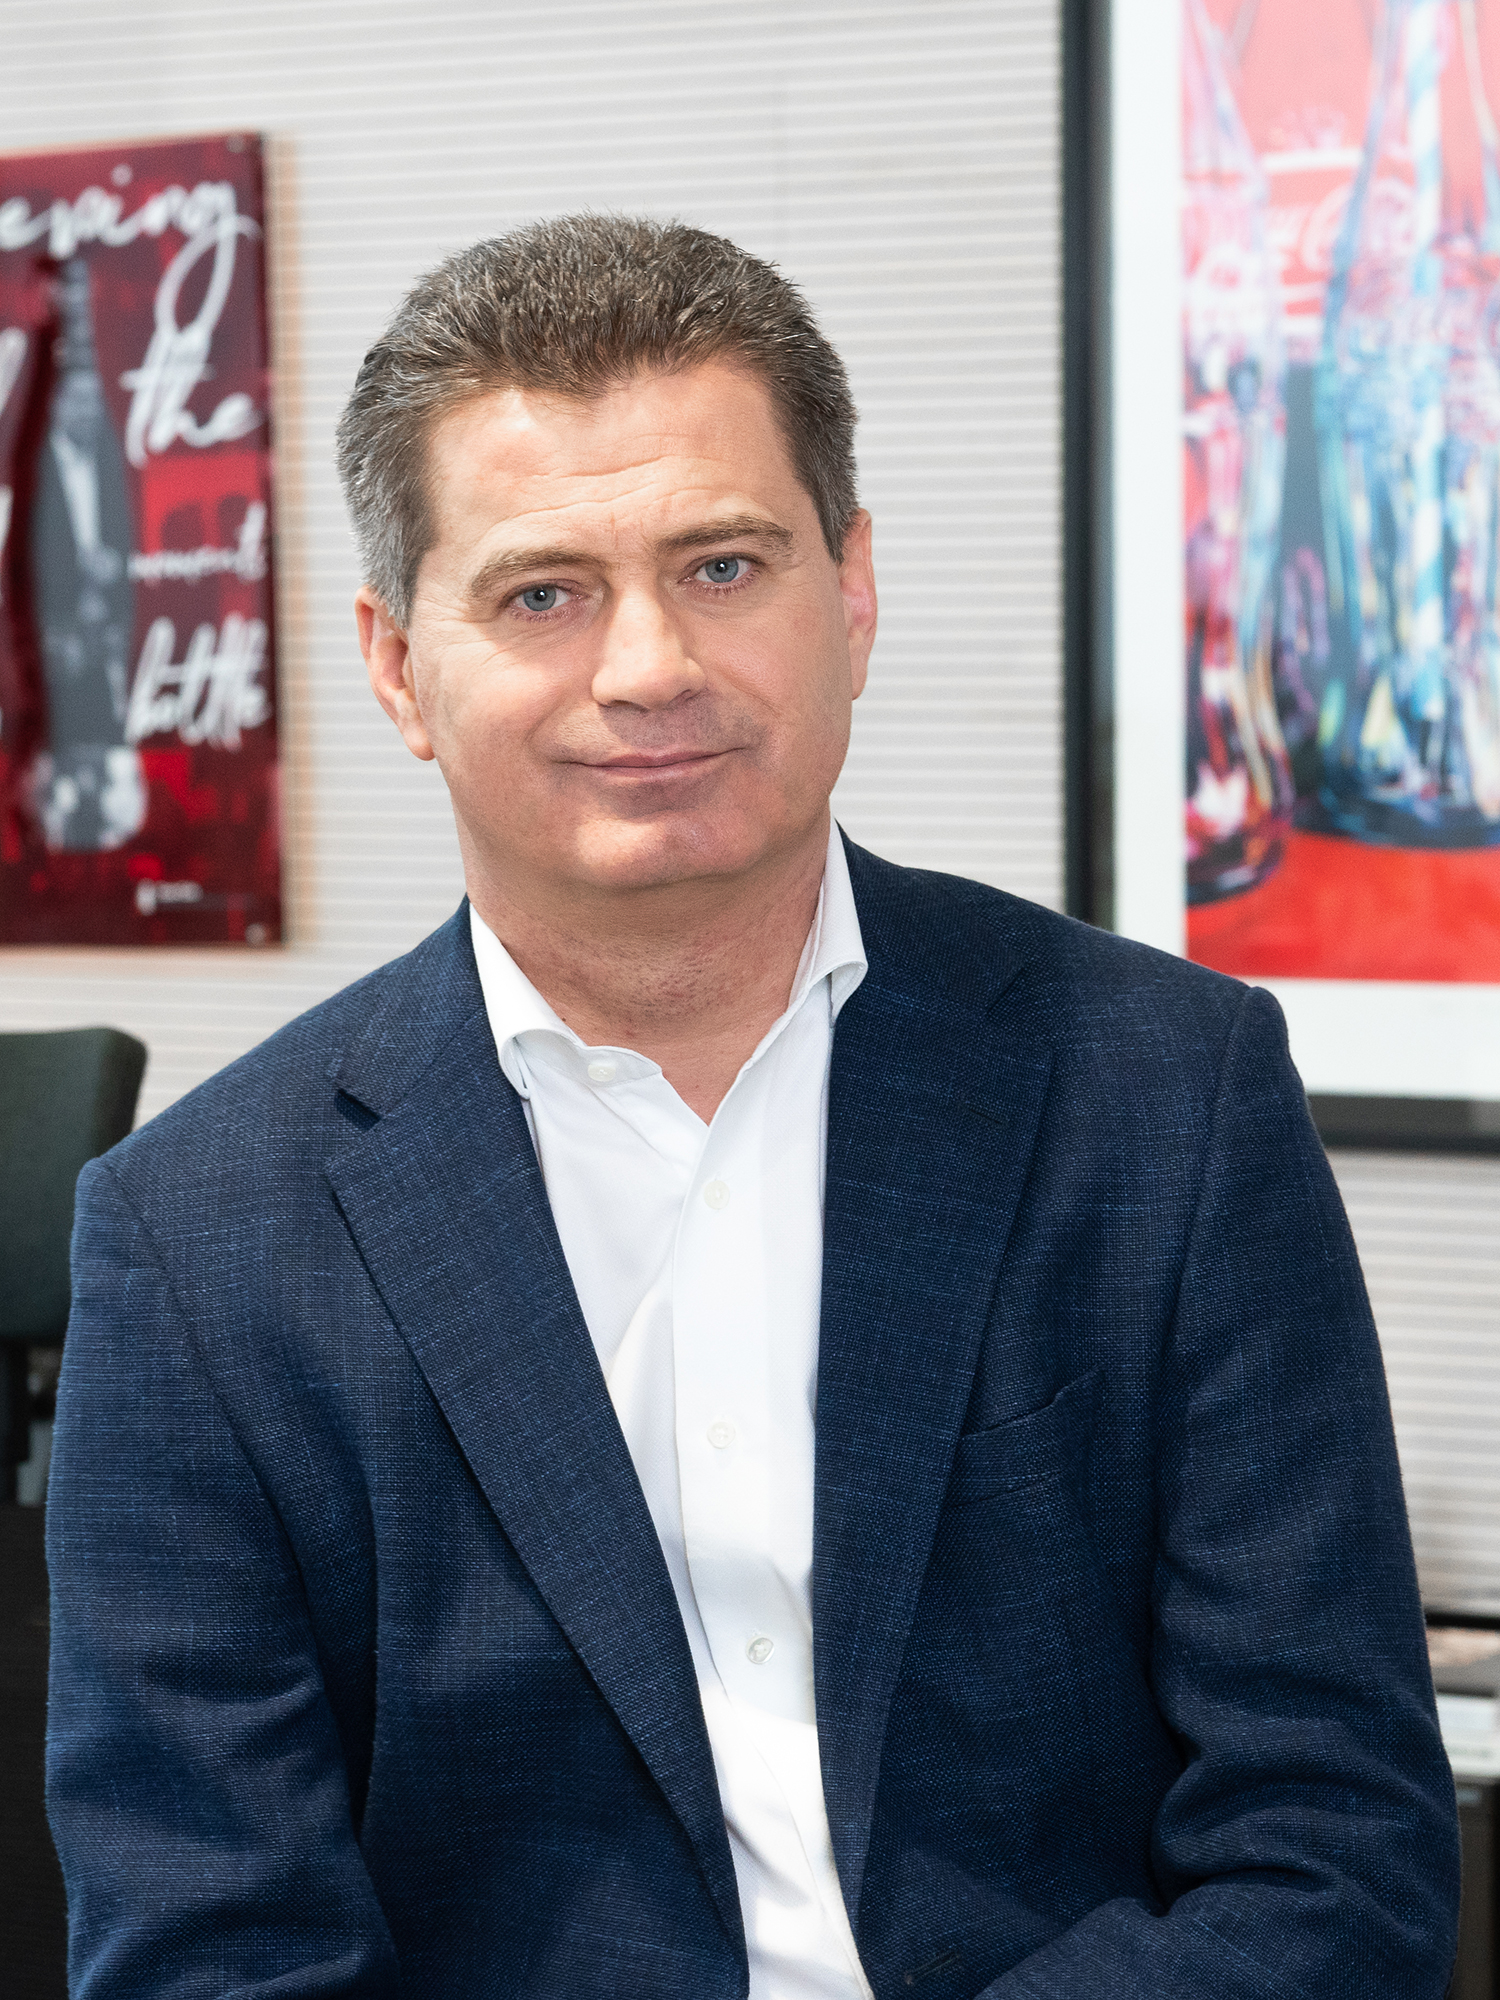 Zoran Bogdanovic, CEO of Coca-Cola HBC